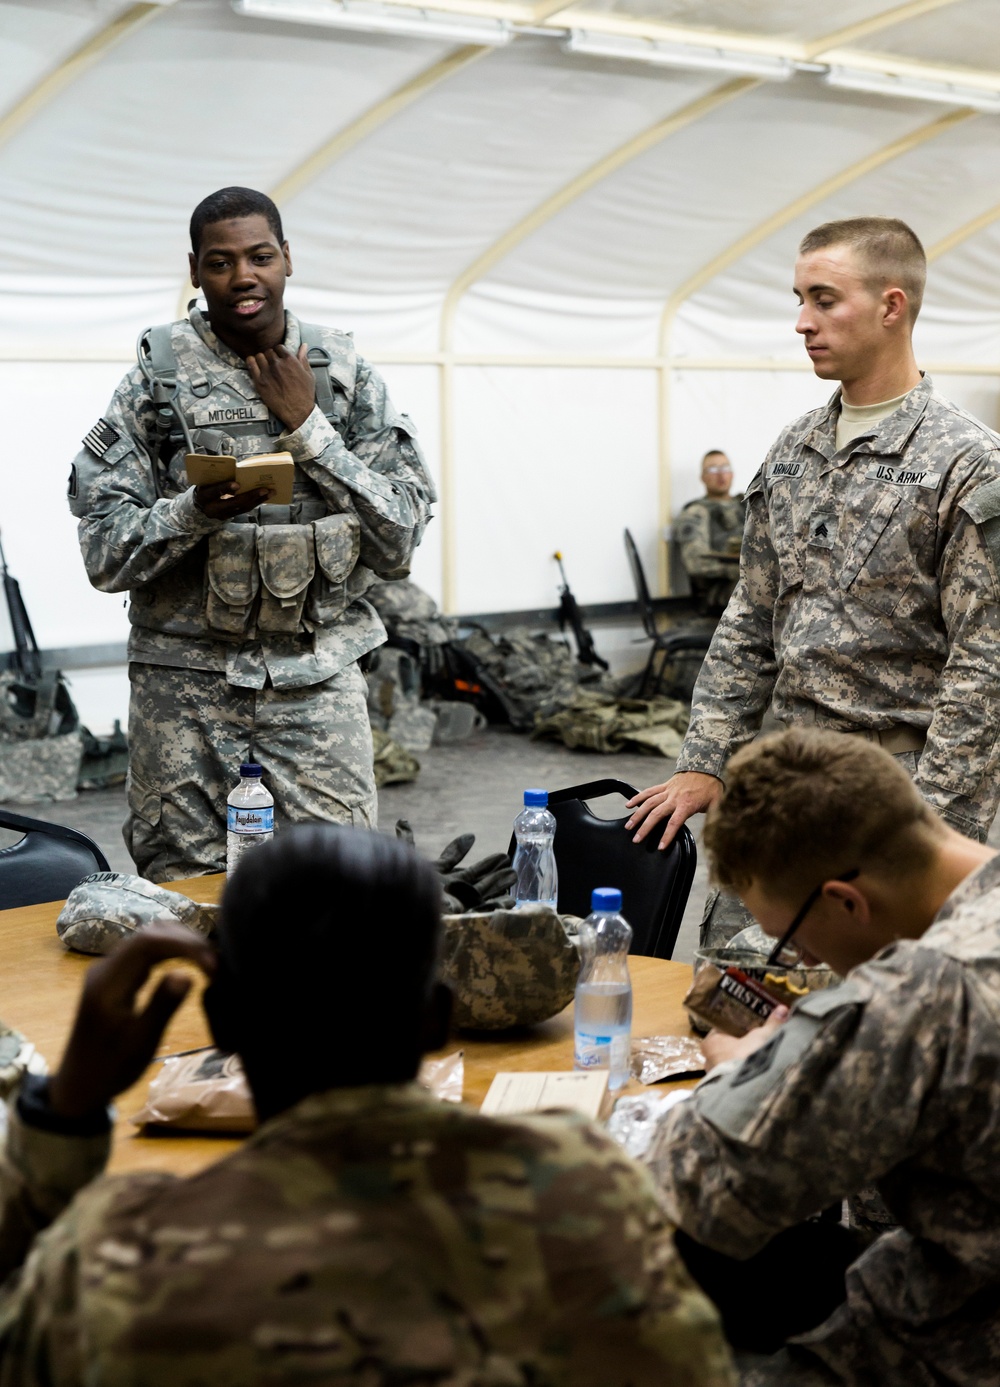 Warrior Leadership Course training lanes in Kuwait